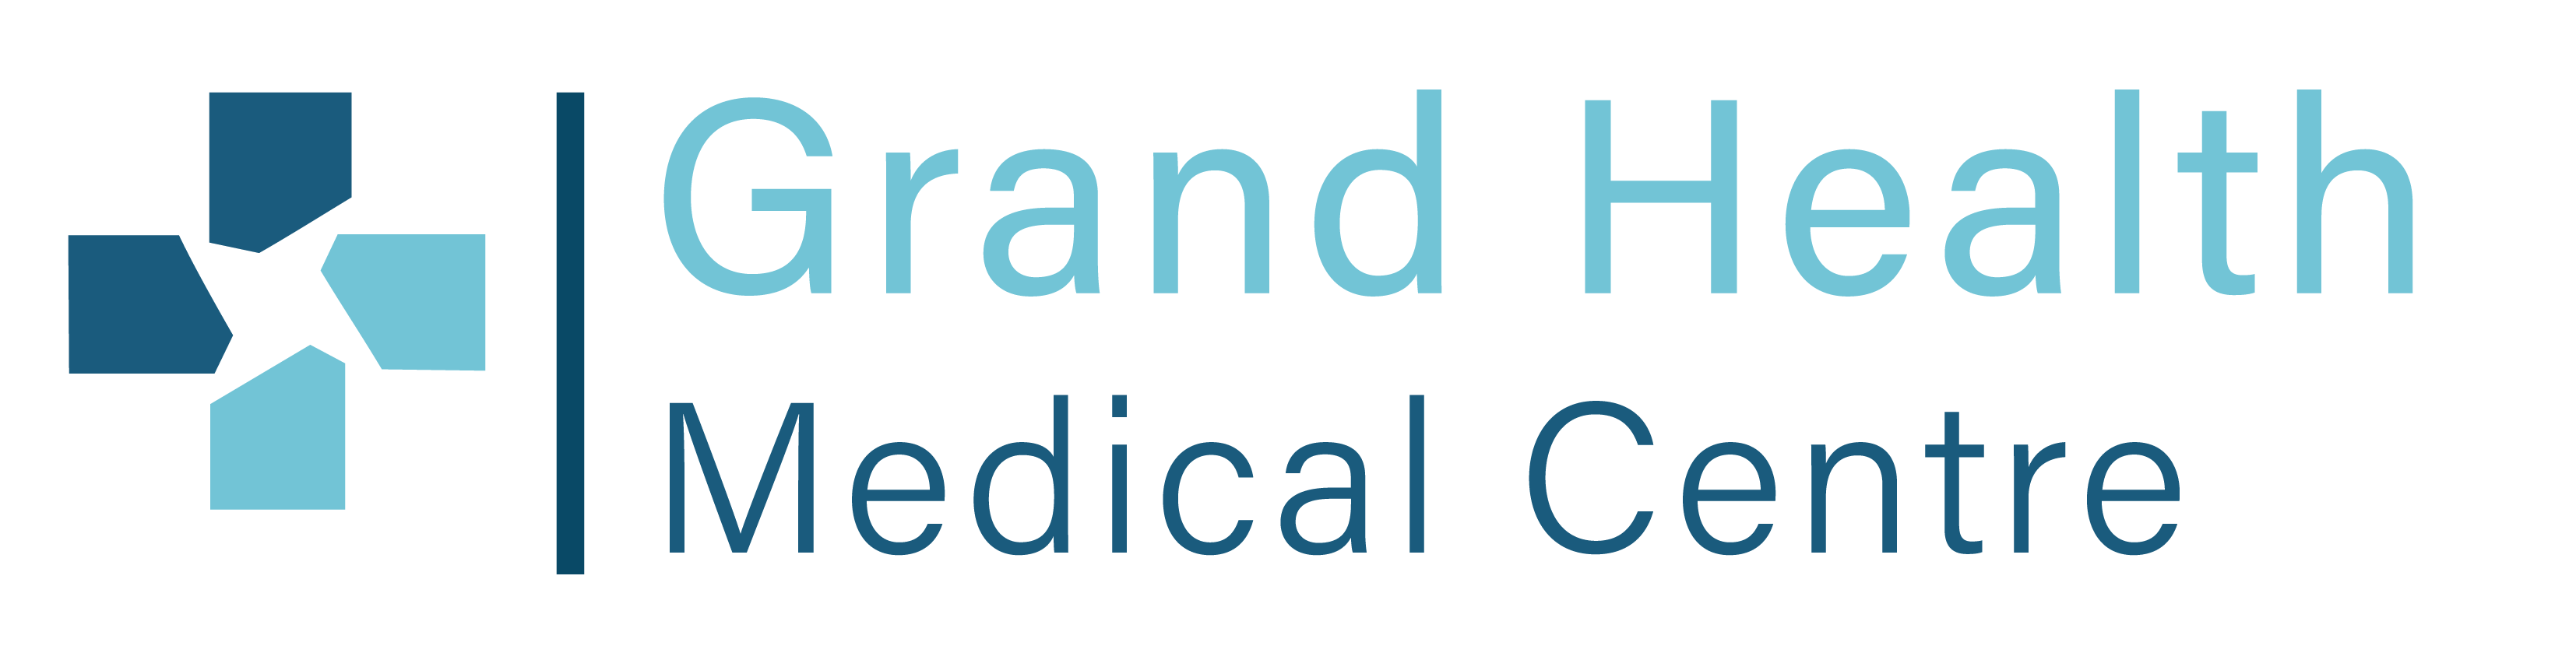 Grand Health Logo Long